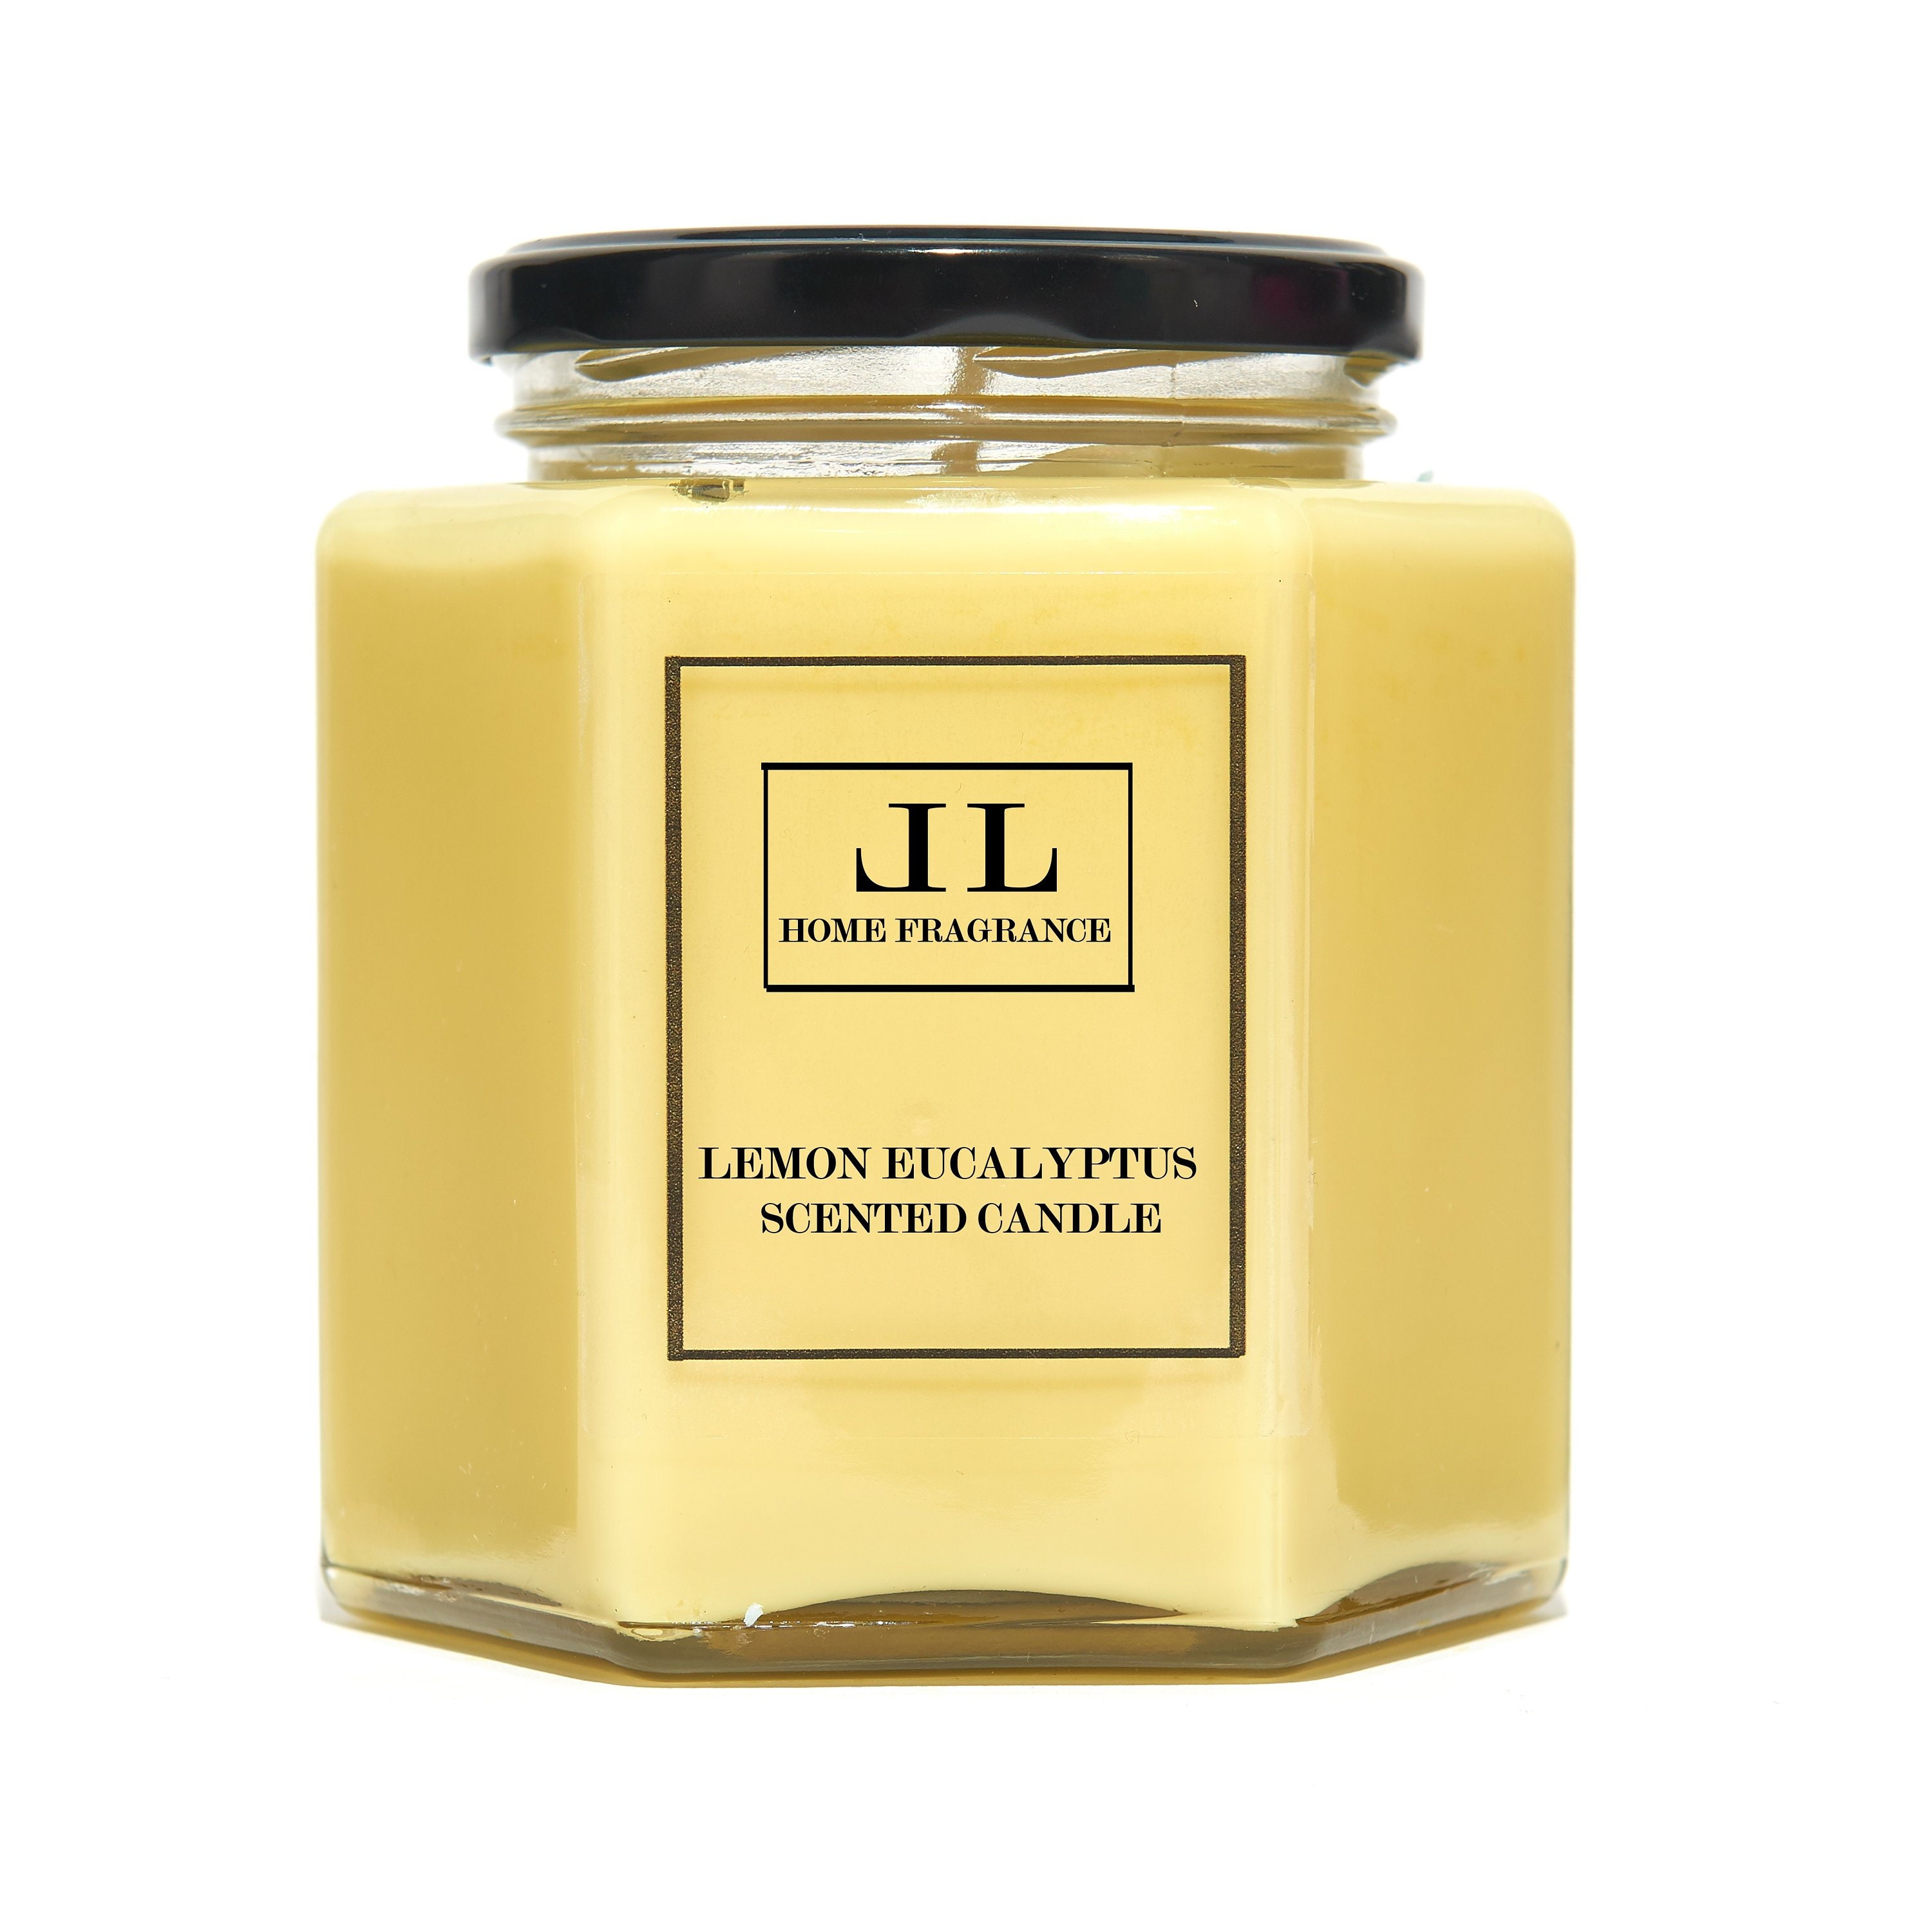 Lemon Essential Oil, Soap & Candle Making Scent